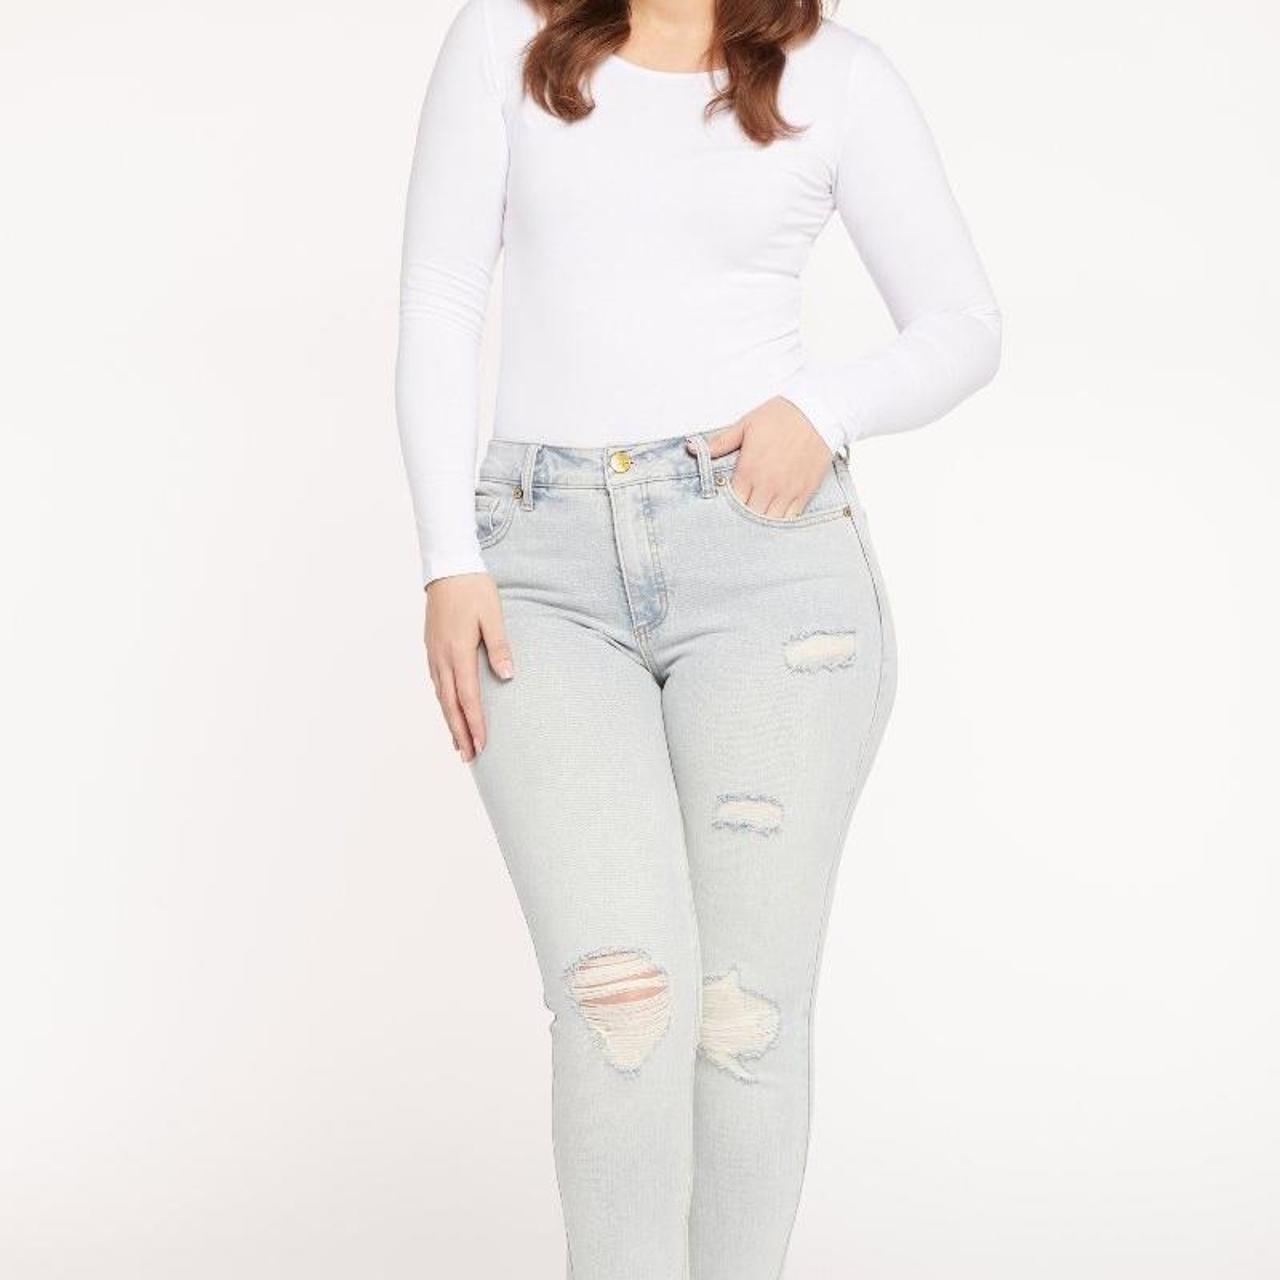 Seven7 Woman's weekend slim fit jeans $30 each - Depop